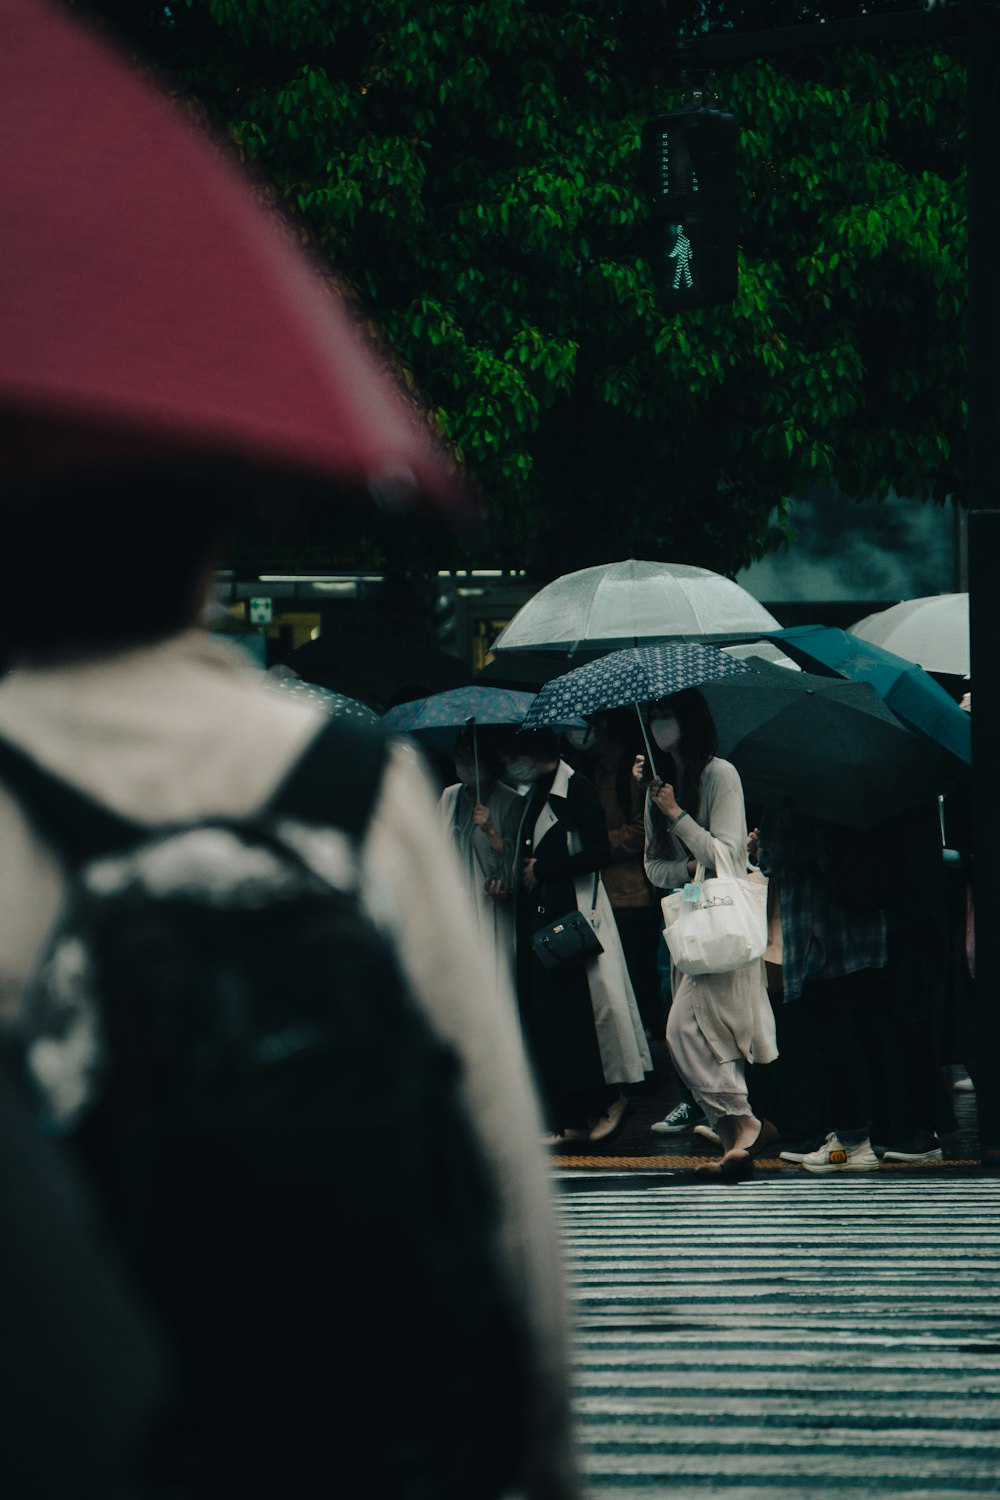 people with umbrellas on a sidewalk